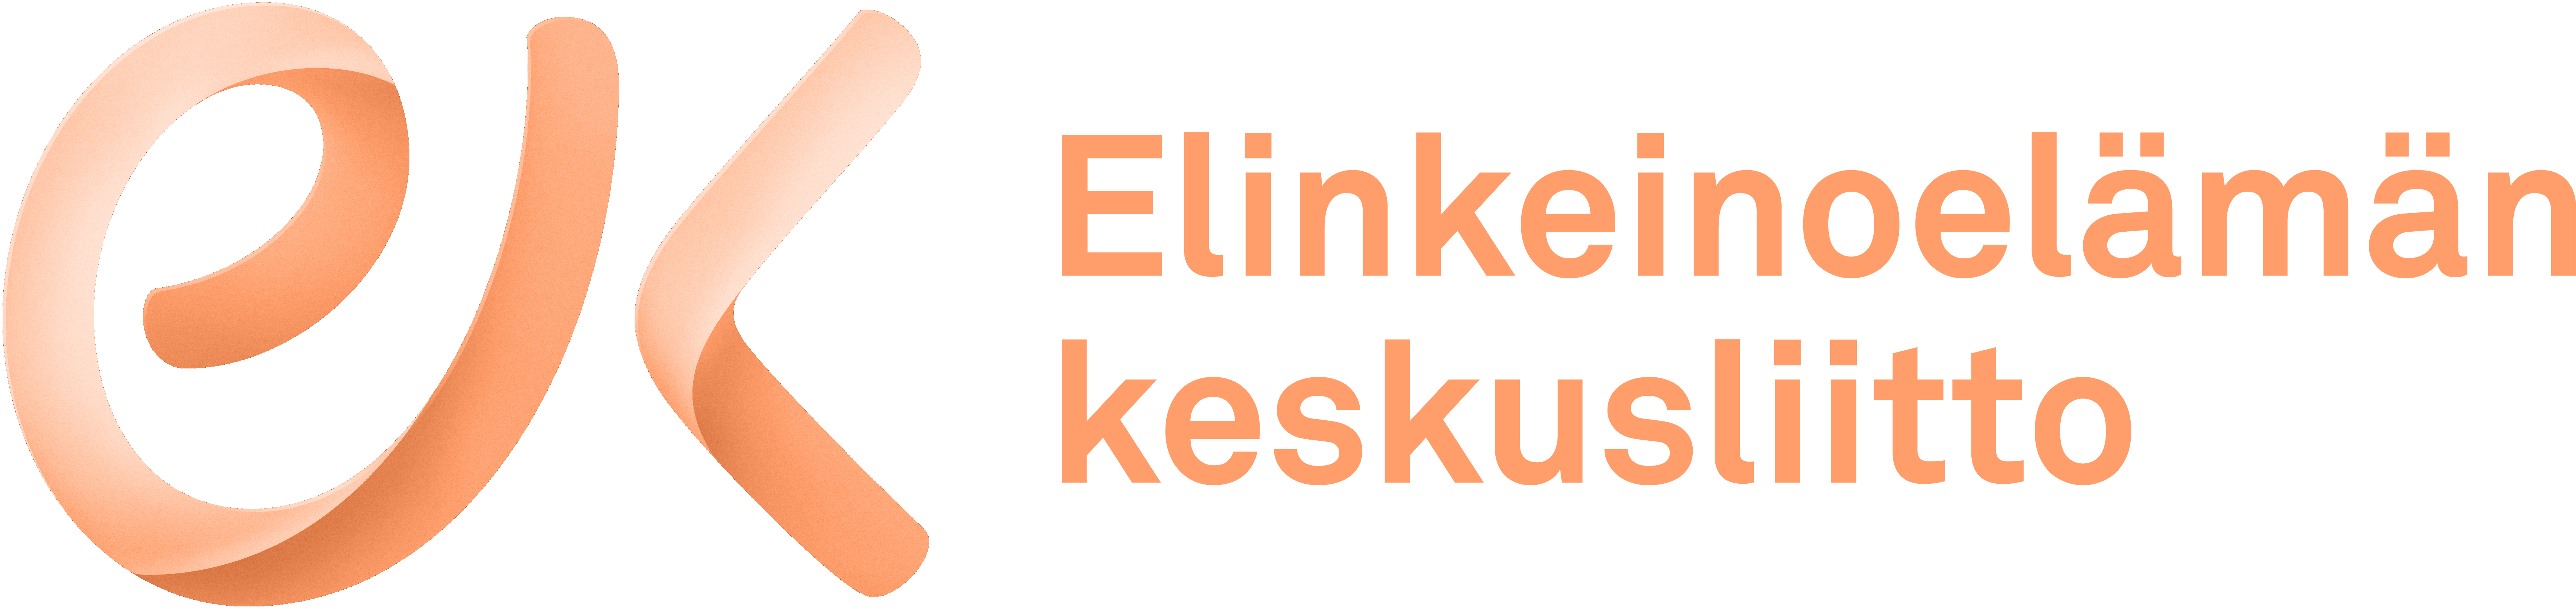 ek_logo_vaaka_fi_persikka.jpg (2.49 MB)